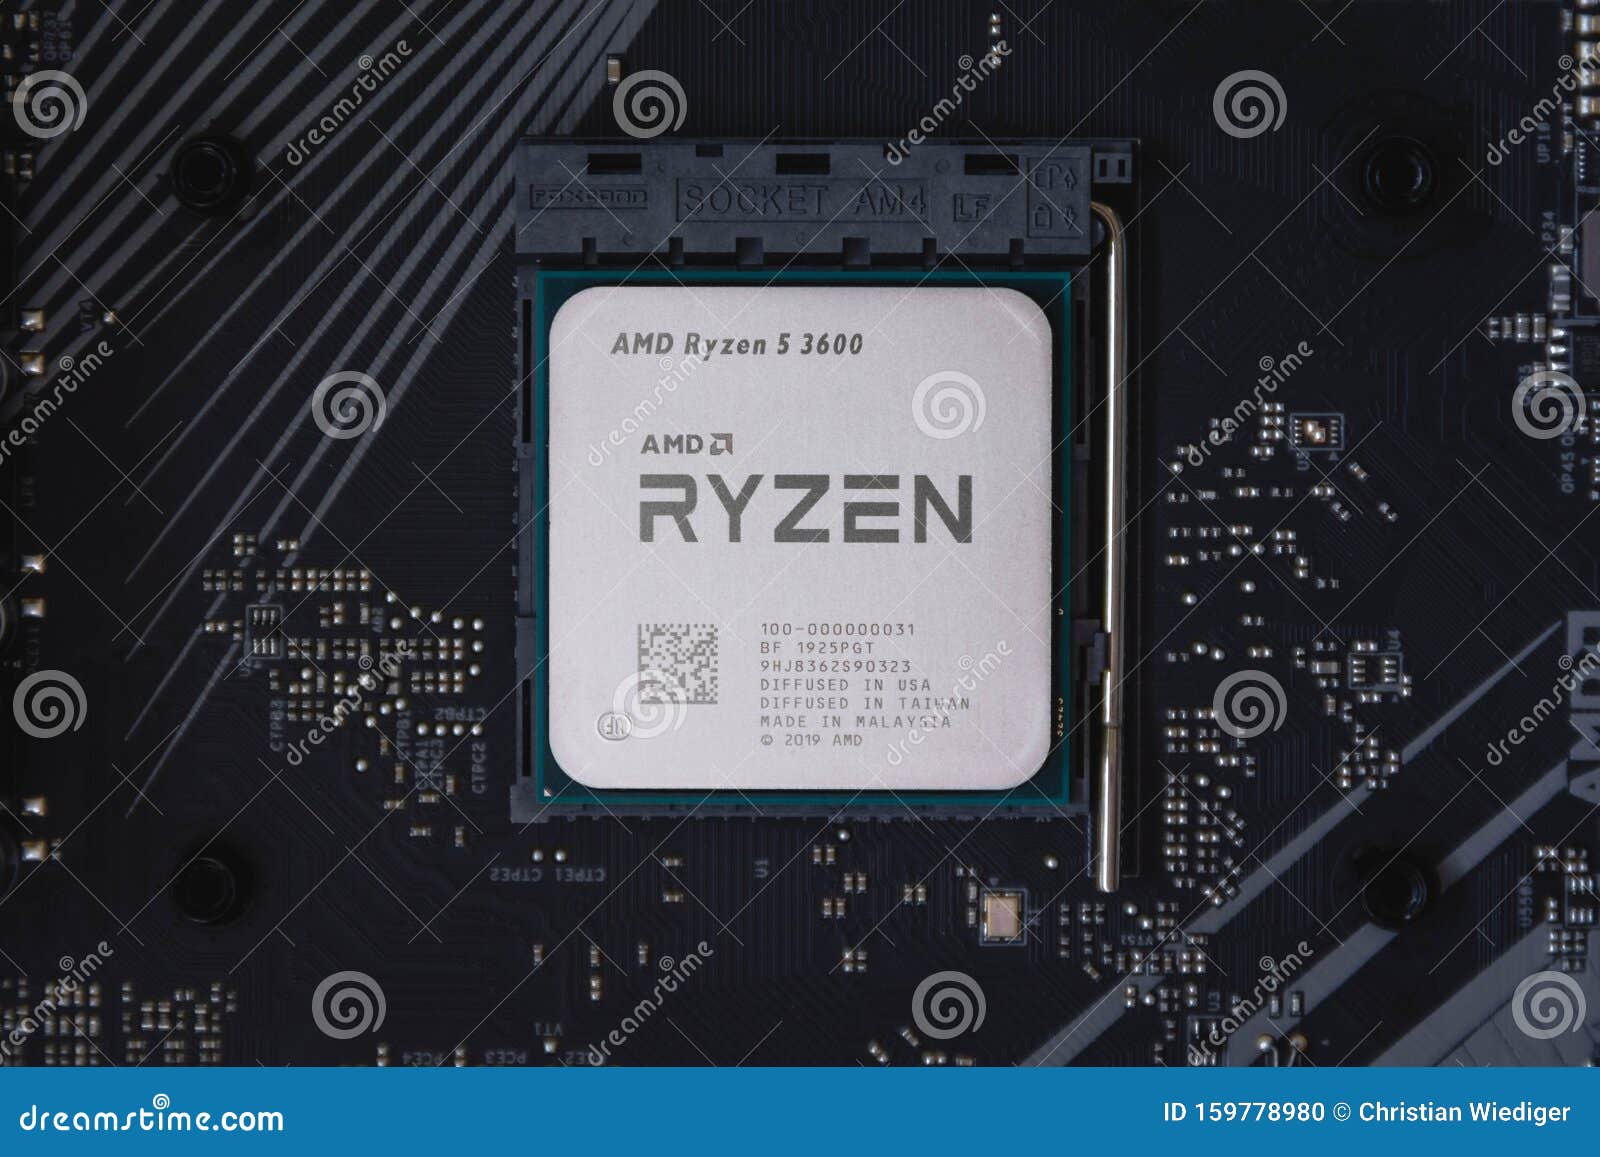 Плата под процессор Ryzen 5 3600 материнская. 6 Нанометров процессор. АМД р7графикс цена.